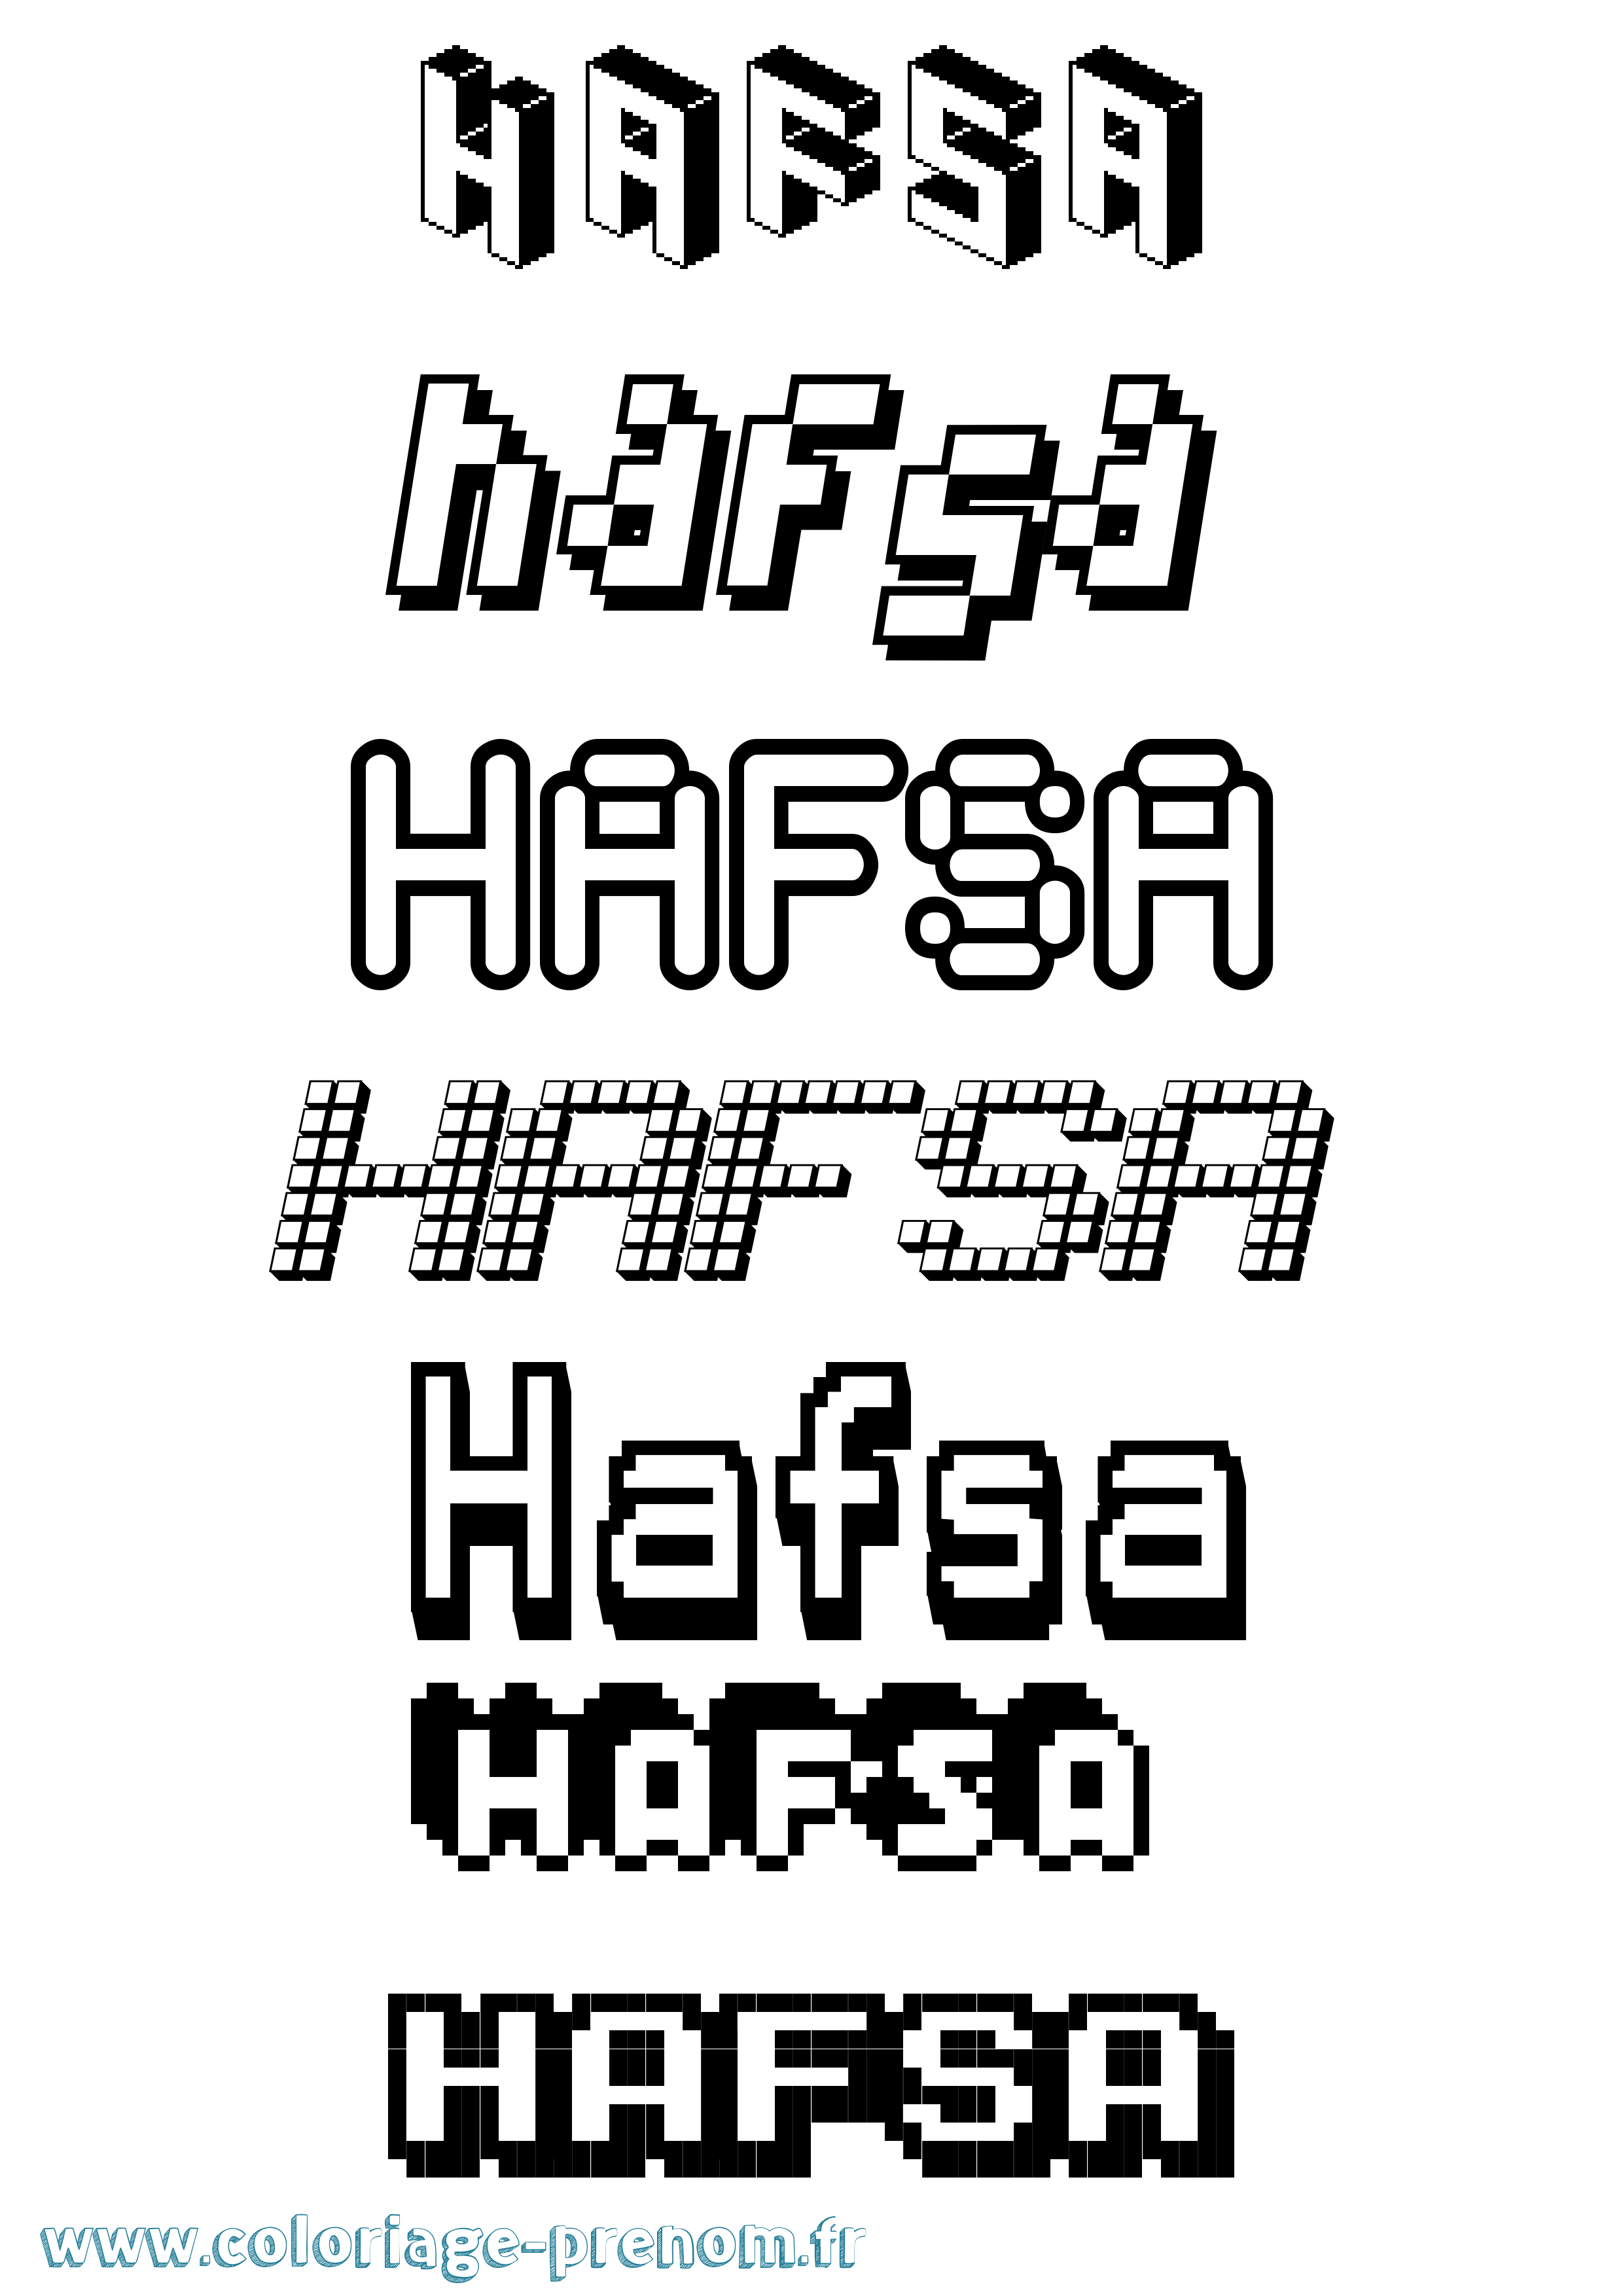 Coloriage prénom Hafsa Pixel